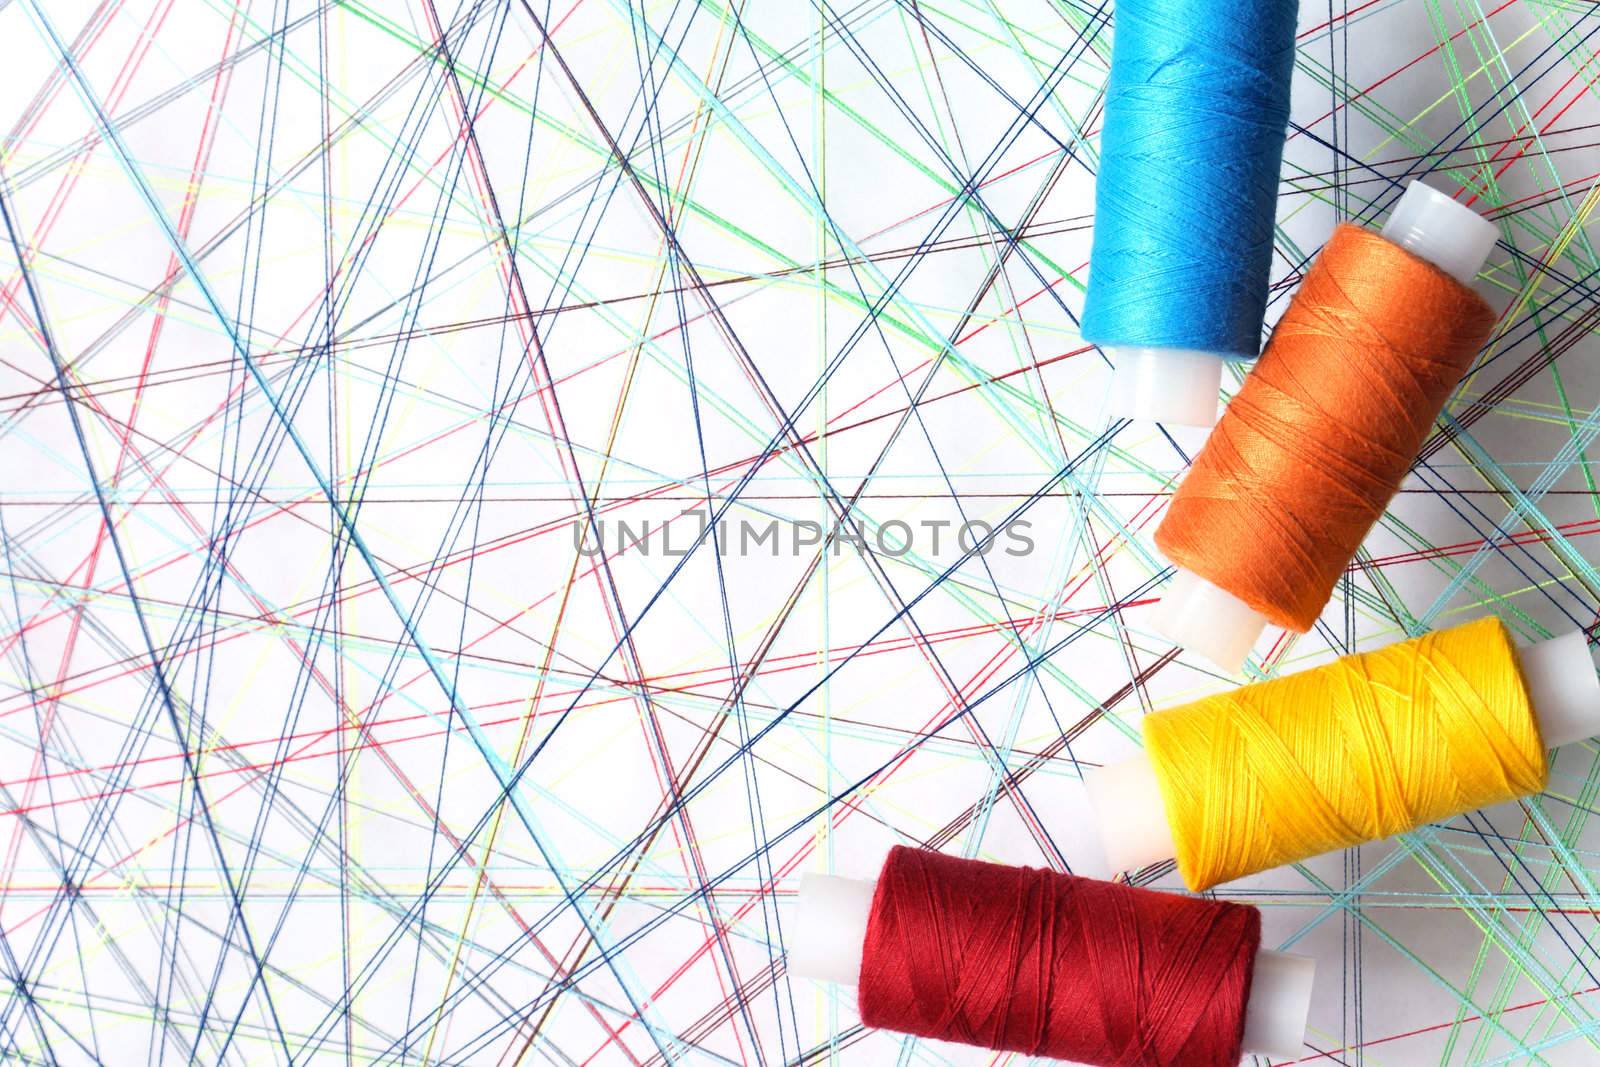 Colored Threads by kvkirillov